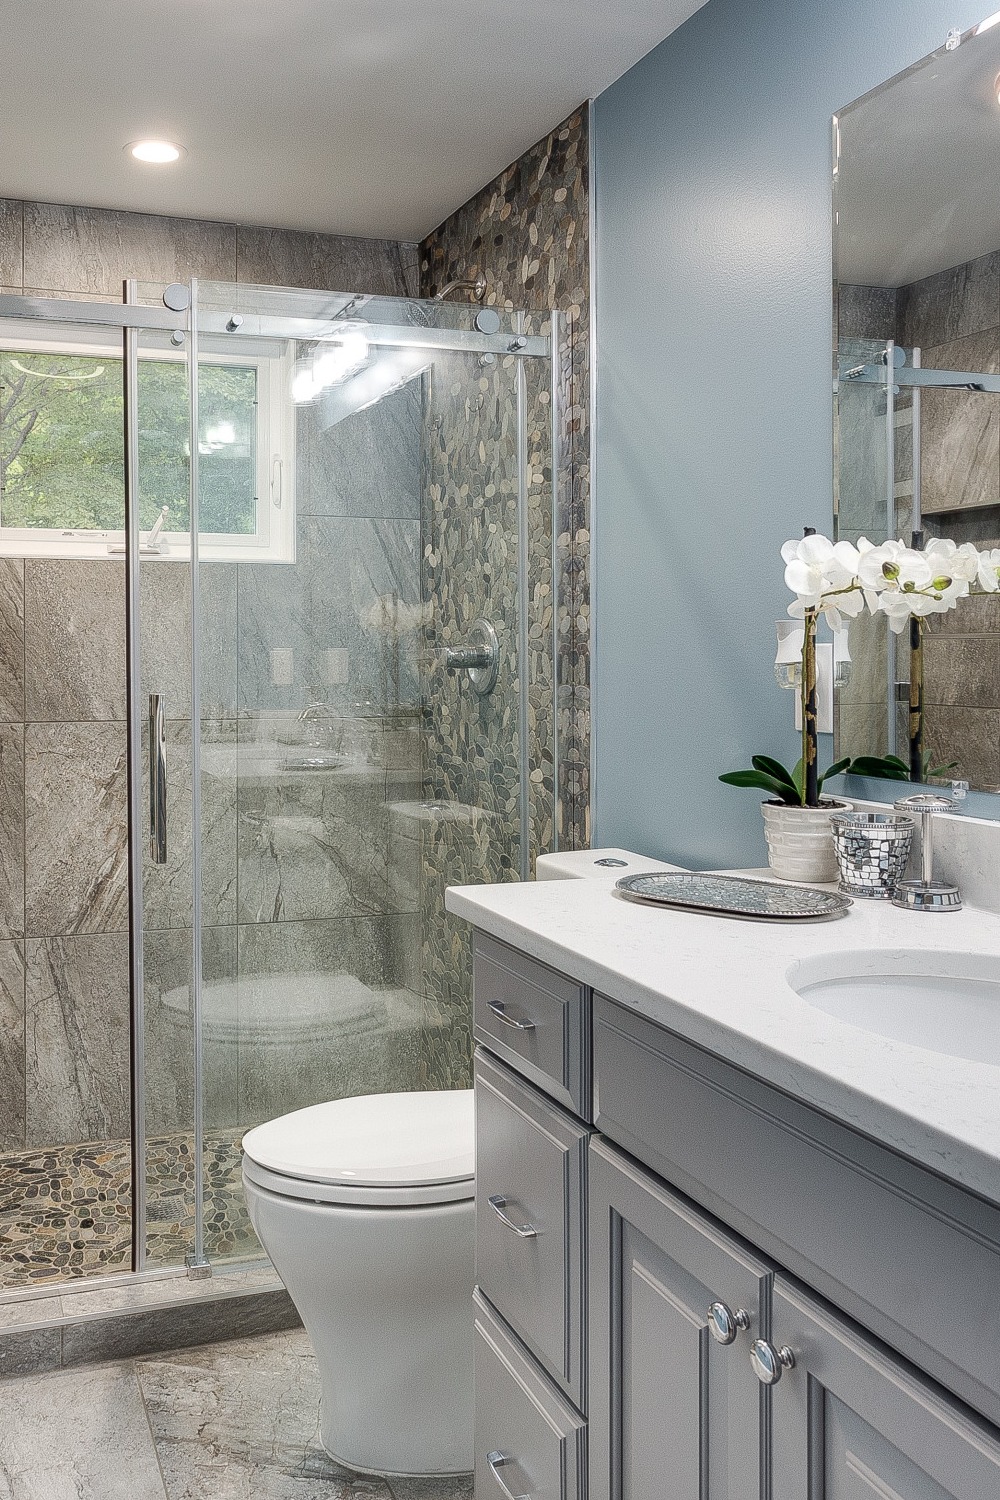 Shower Head Shower Style Average Cost Bathroom Costs Re Bath Free Design Consultation New Bath Vanity Bathrooms Remodel